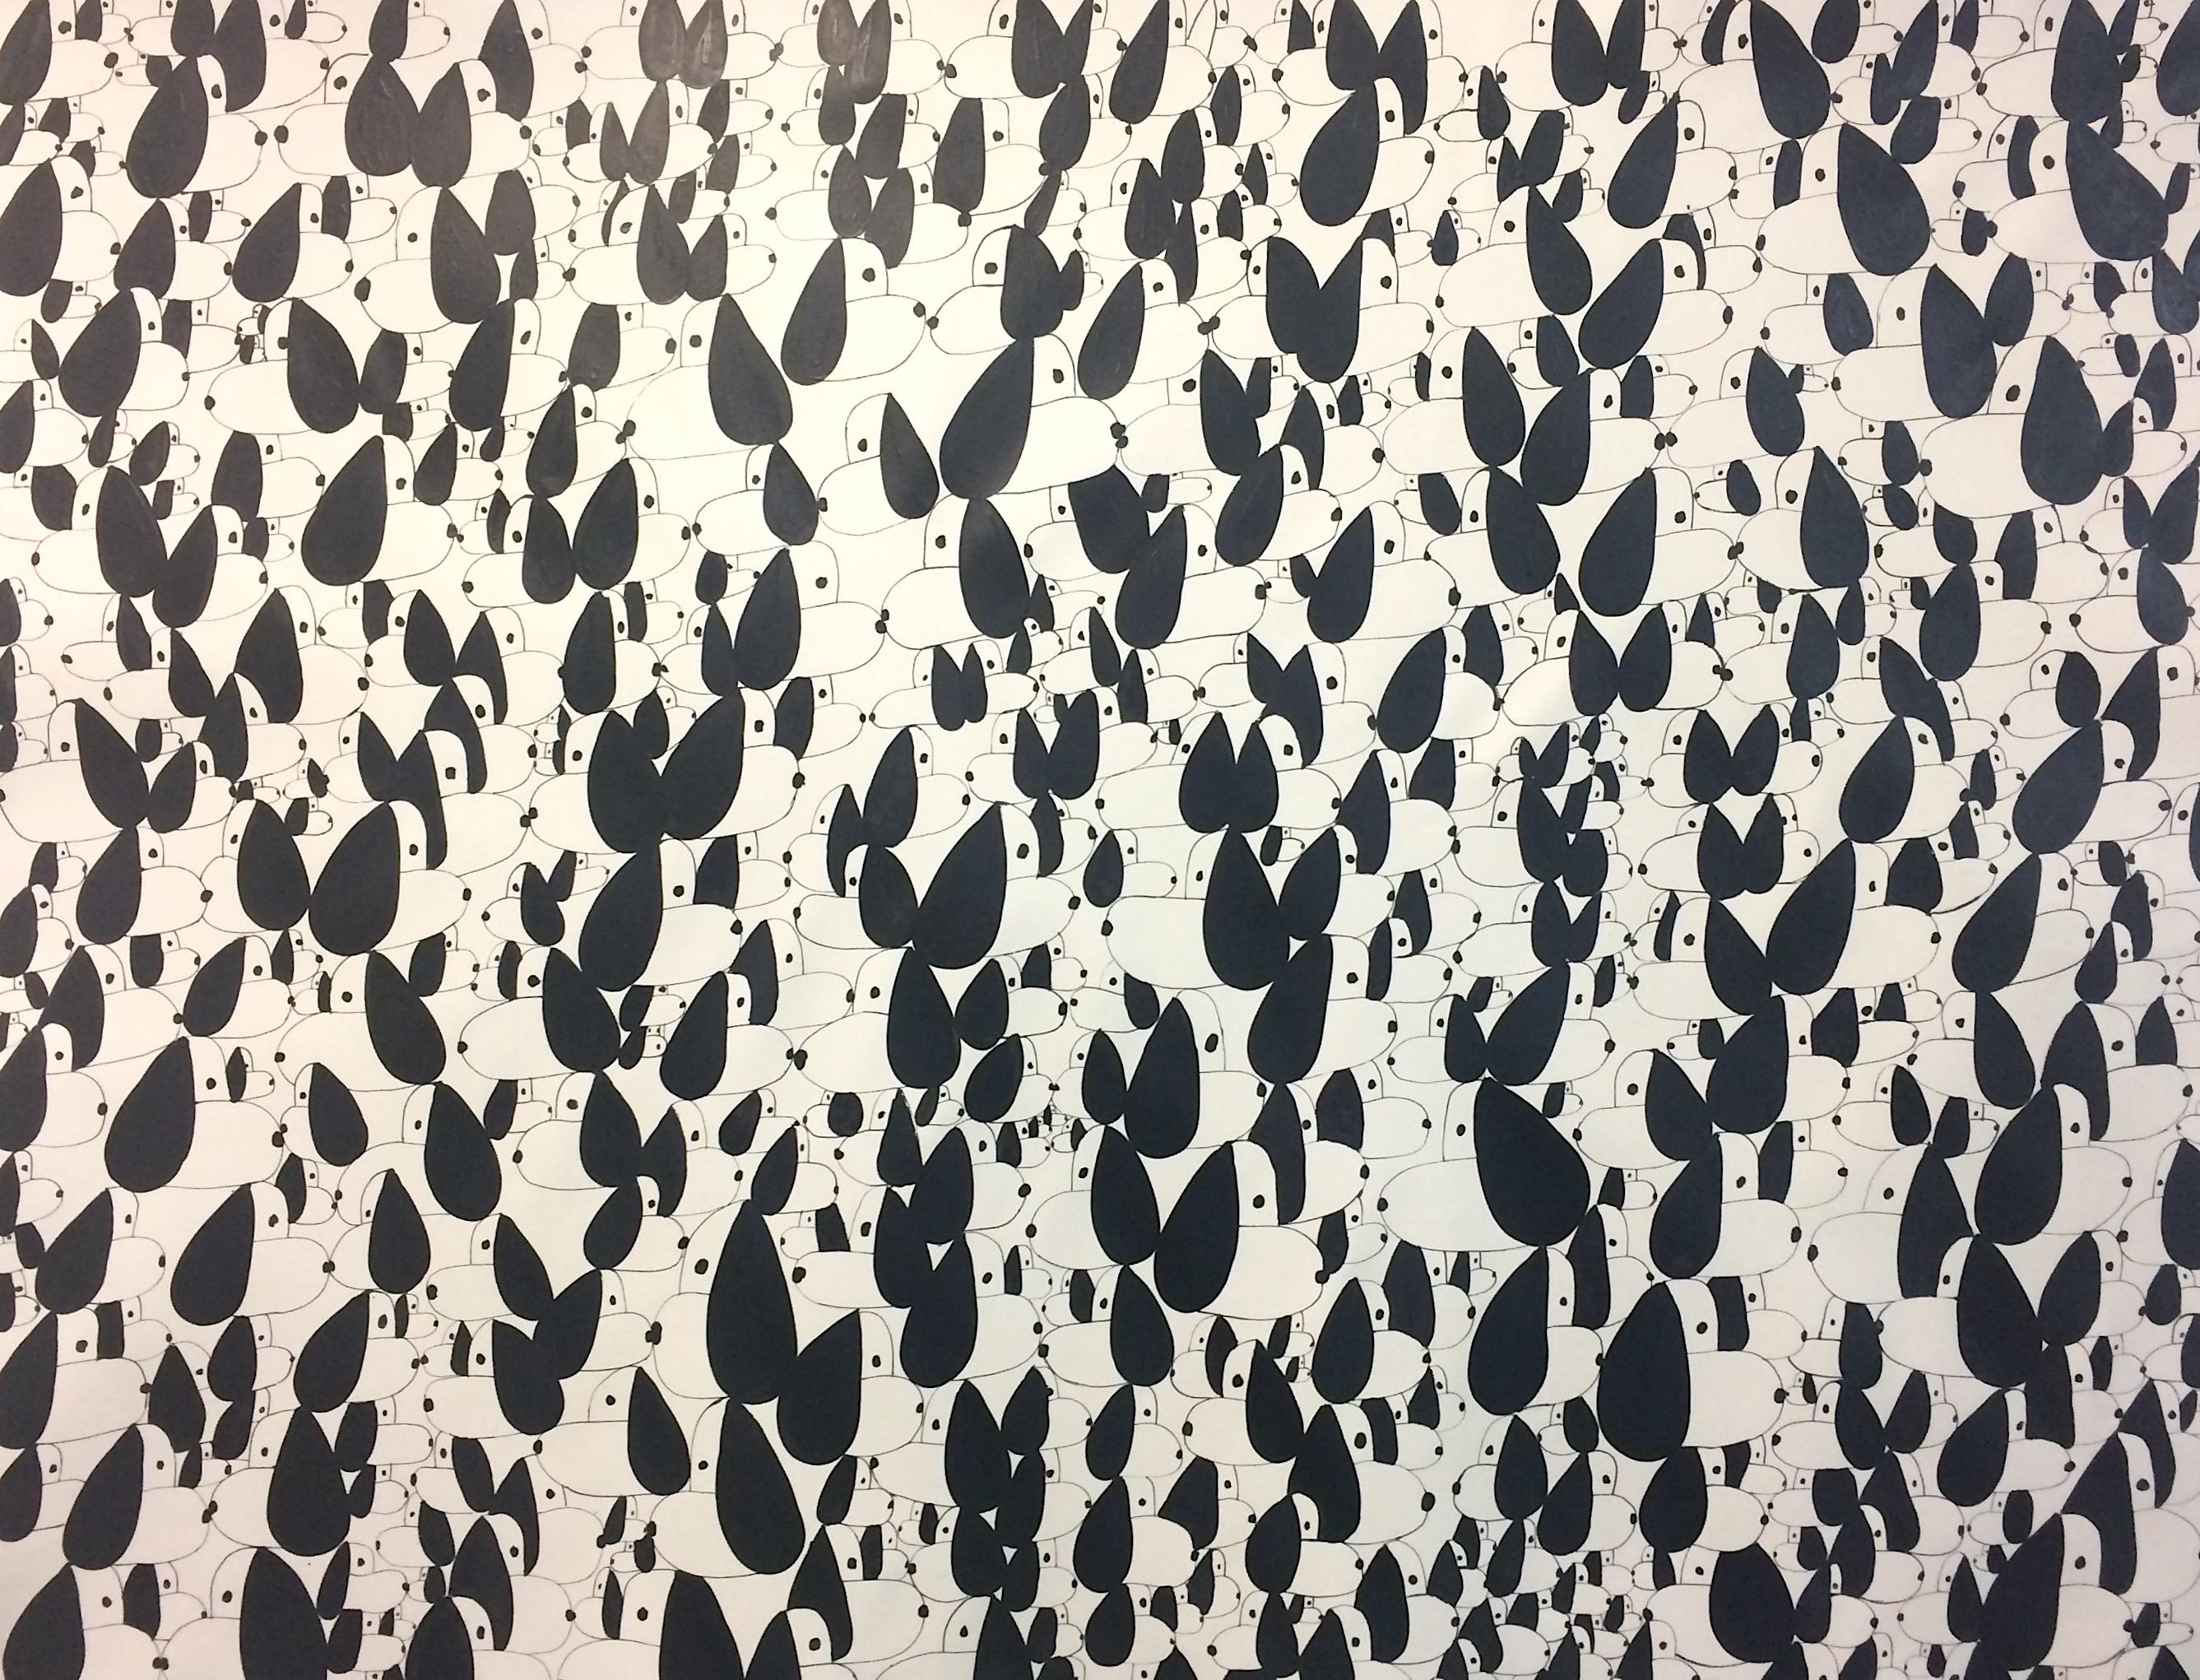 Nina Bovasso Animal Painting - Black and White Snoopies on Canvas 2